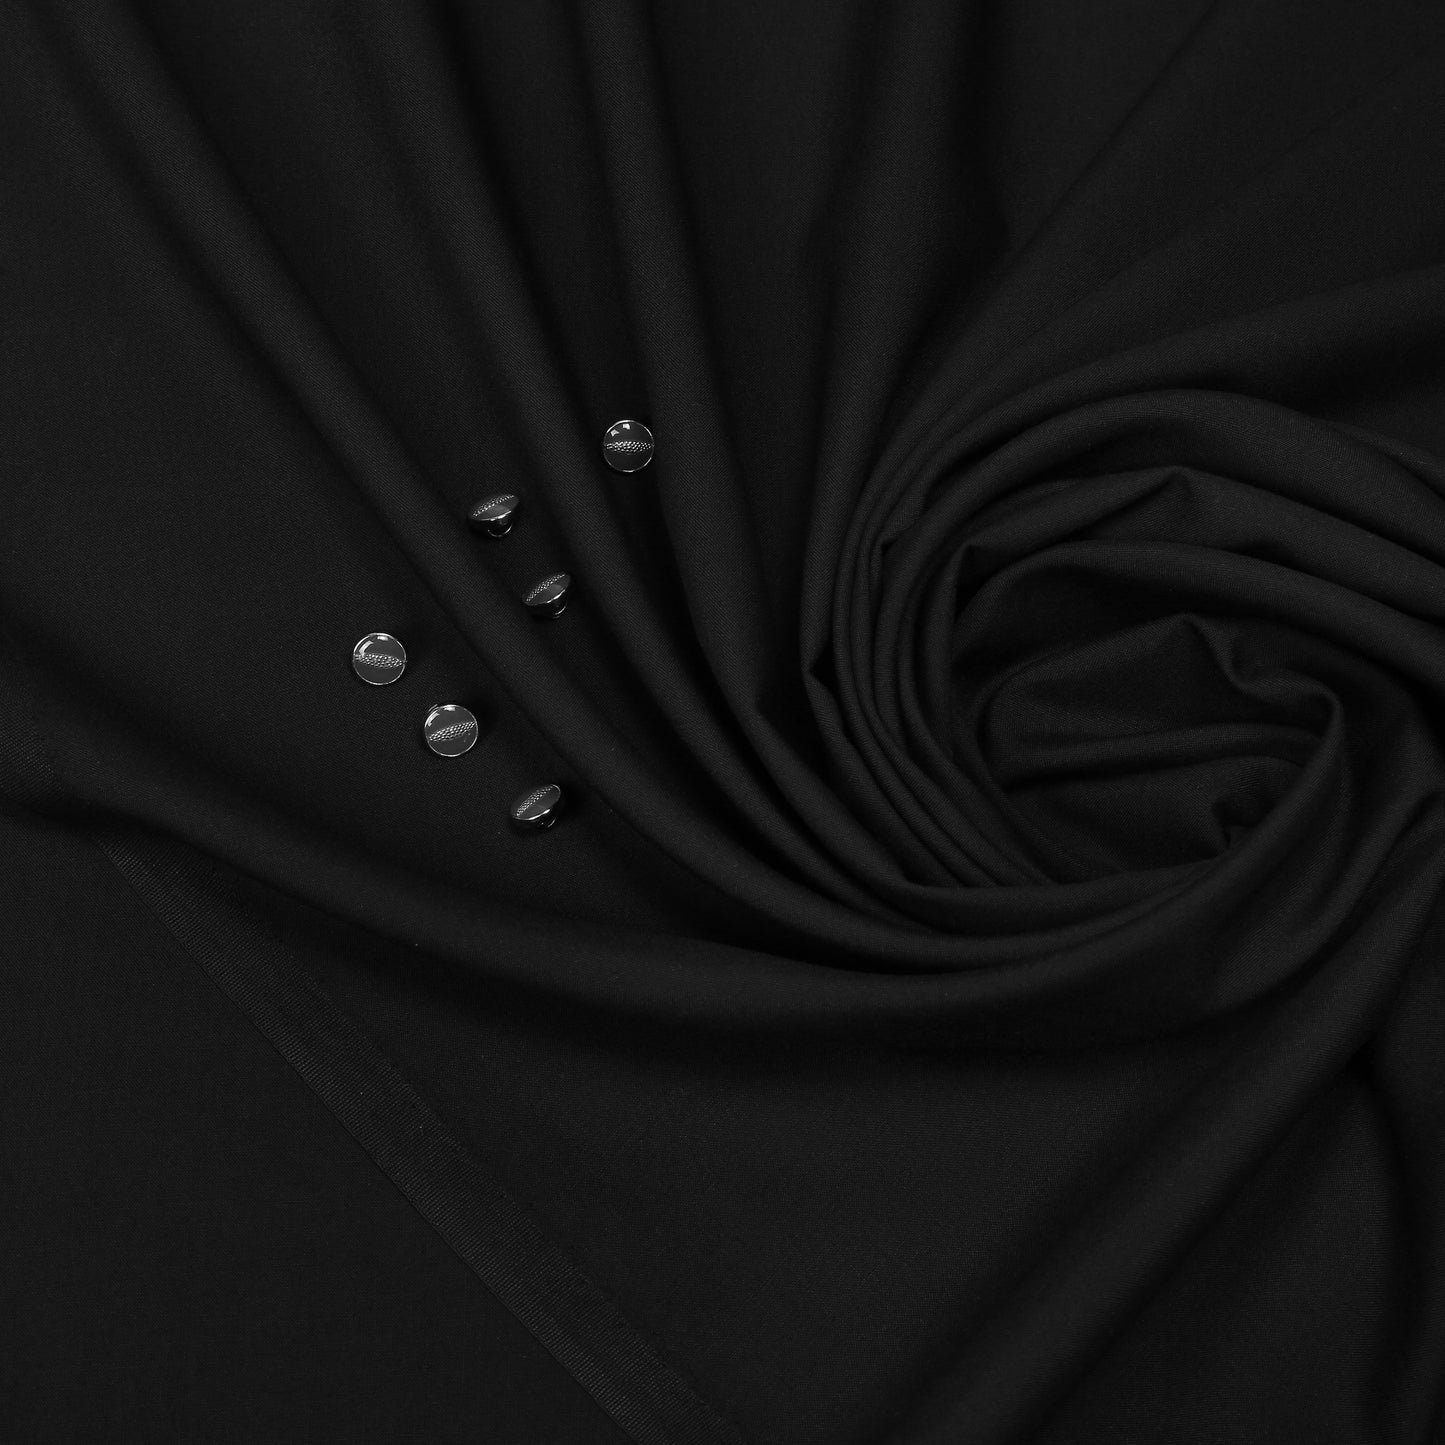 Midnight Black Wash & Wear - Sleek Sophistication